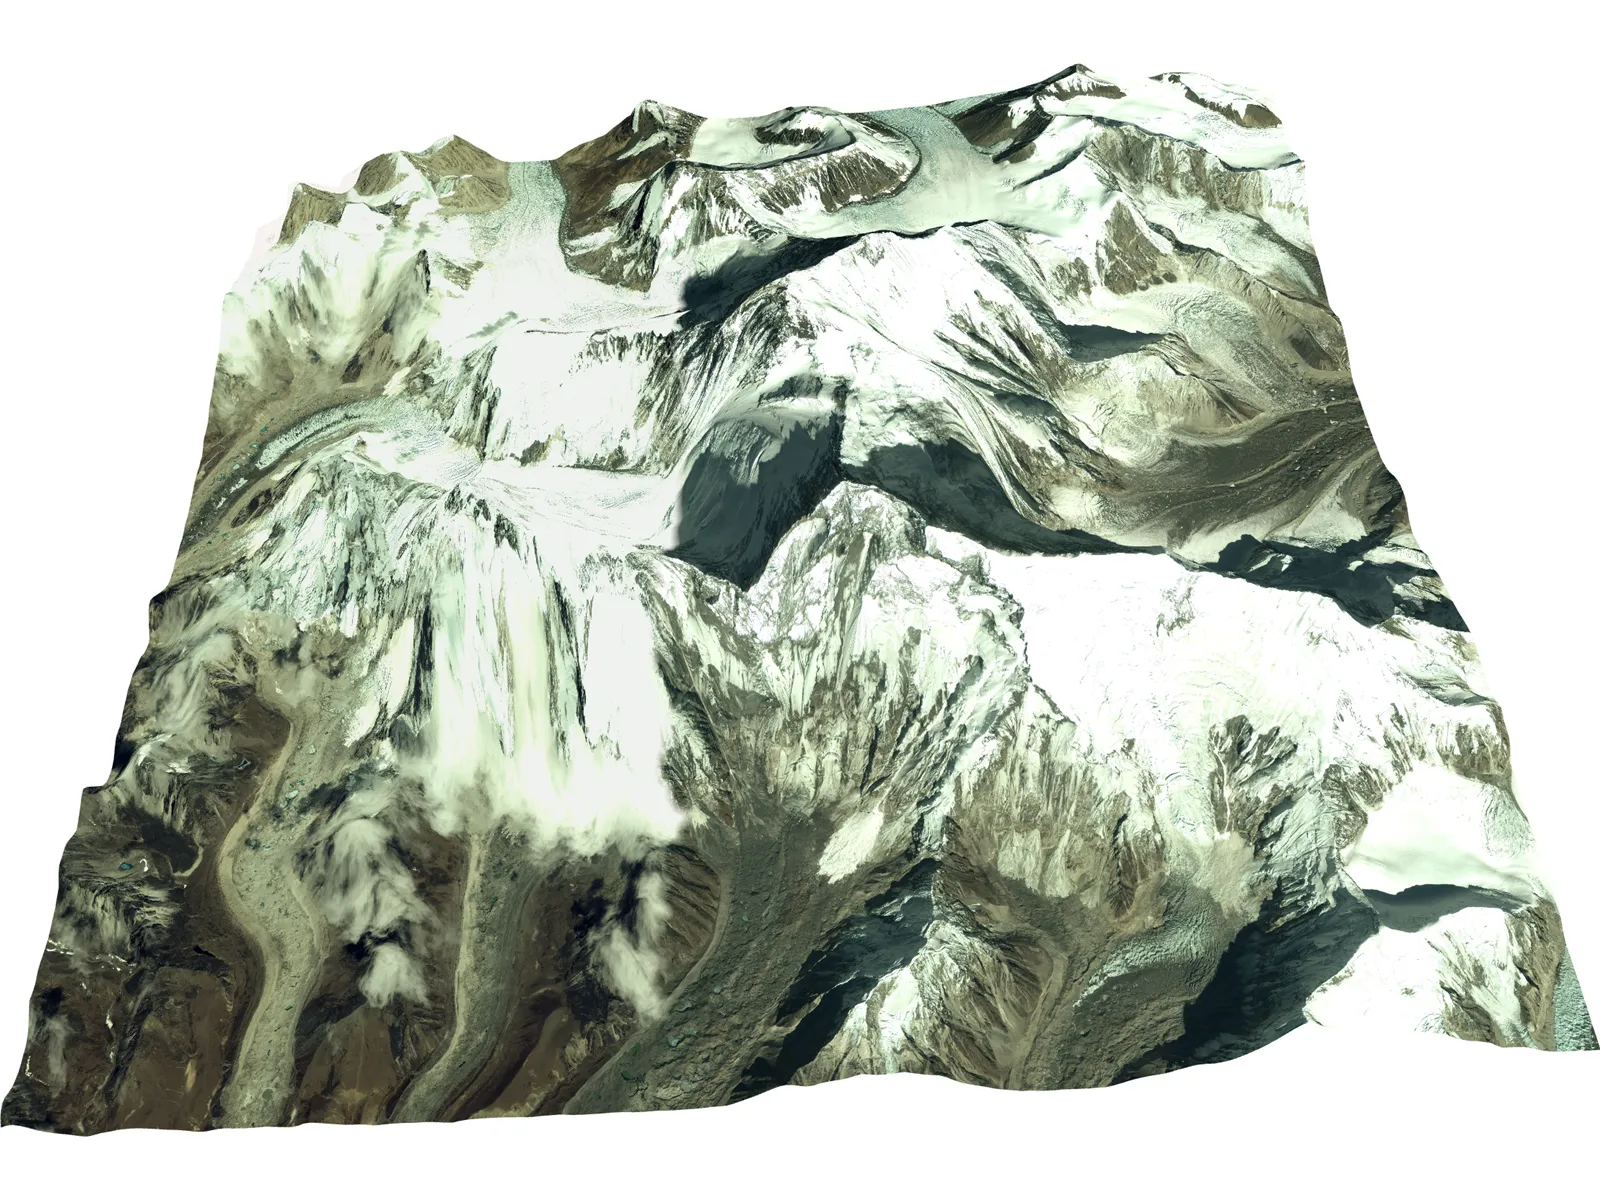 Mount Everest 3D Model